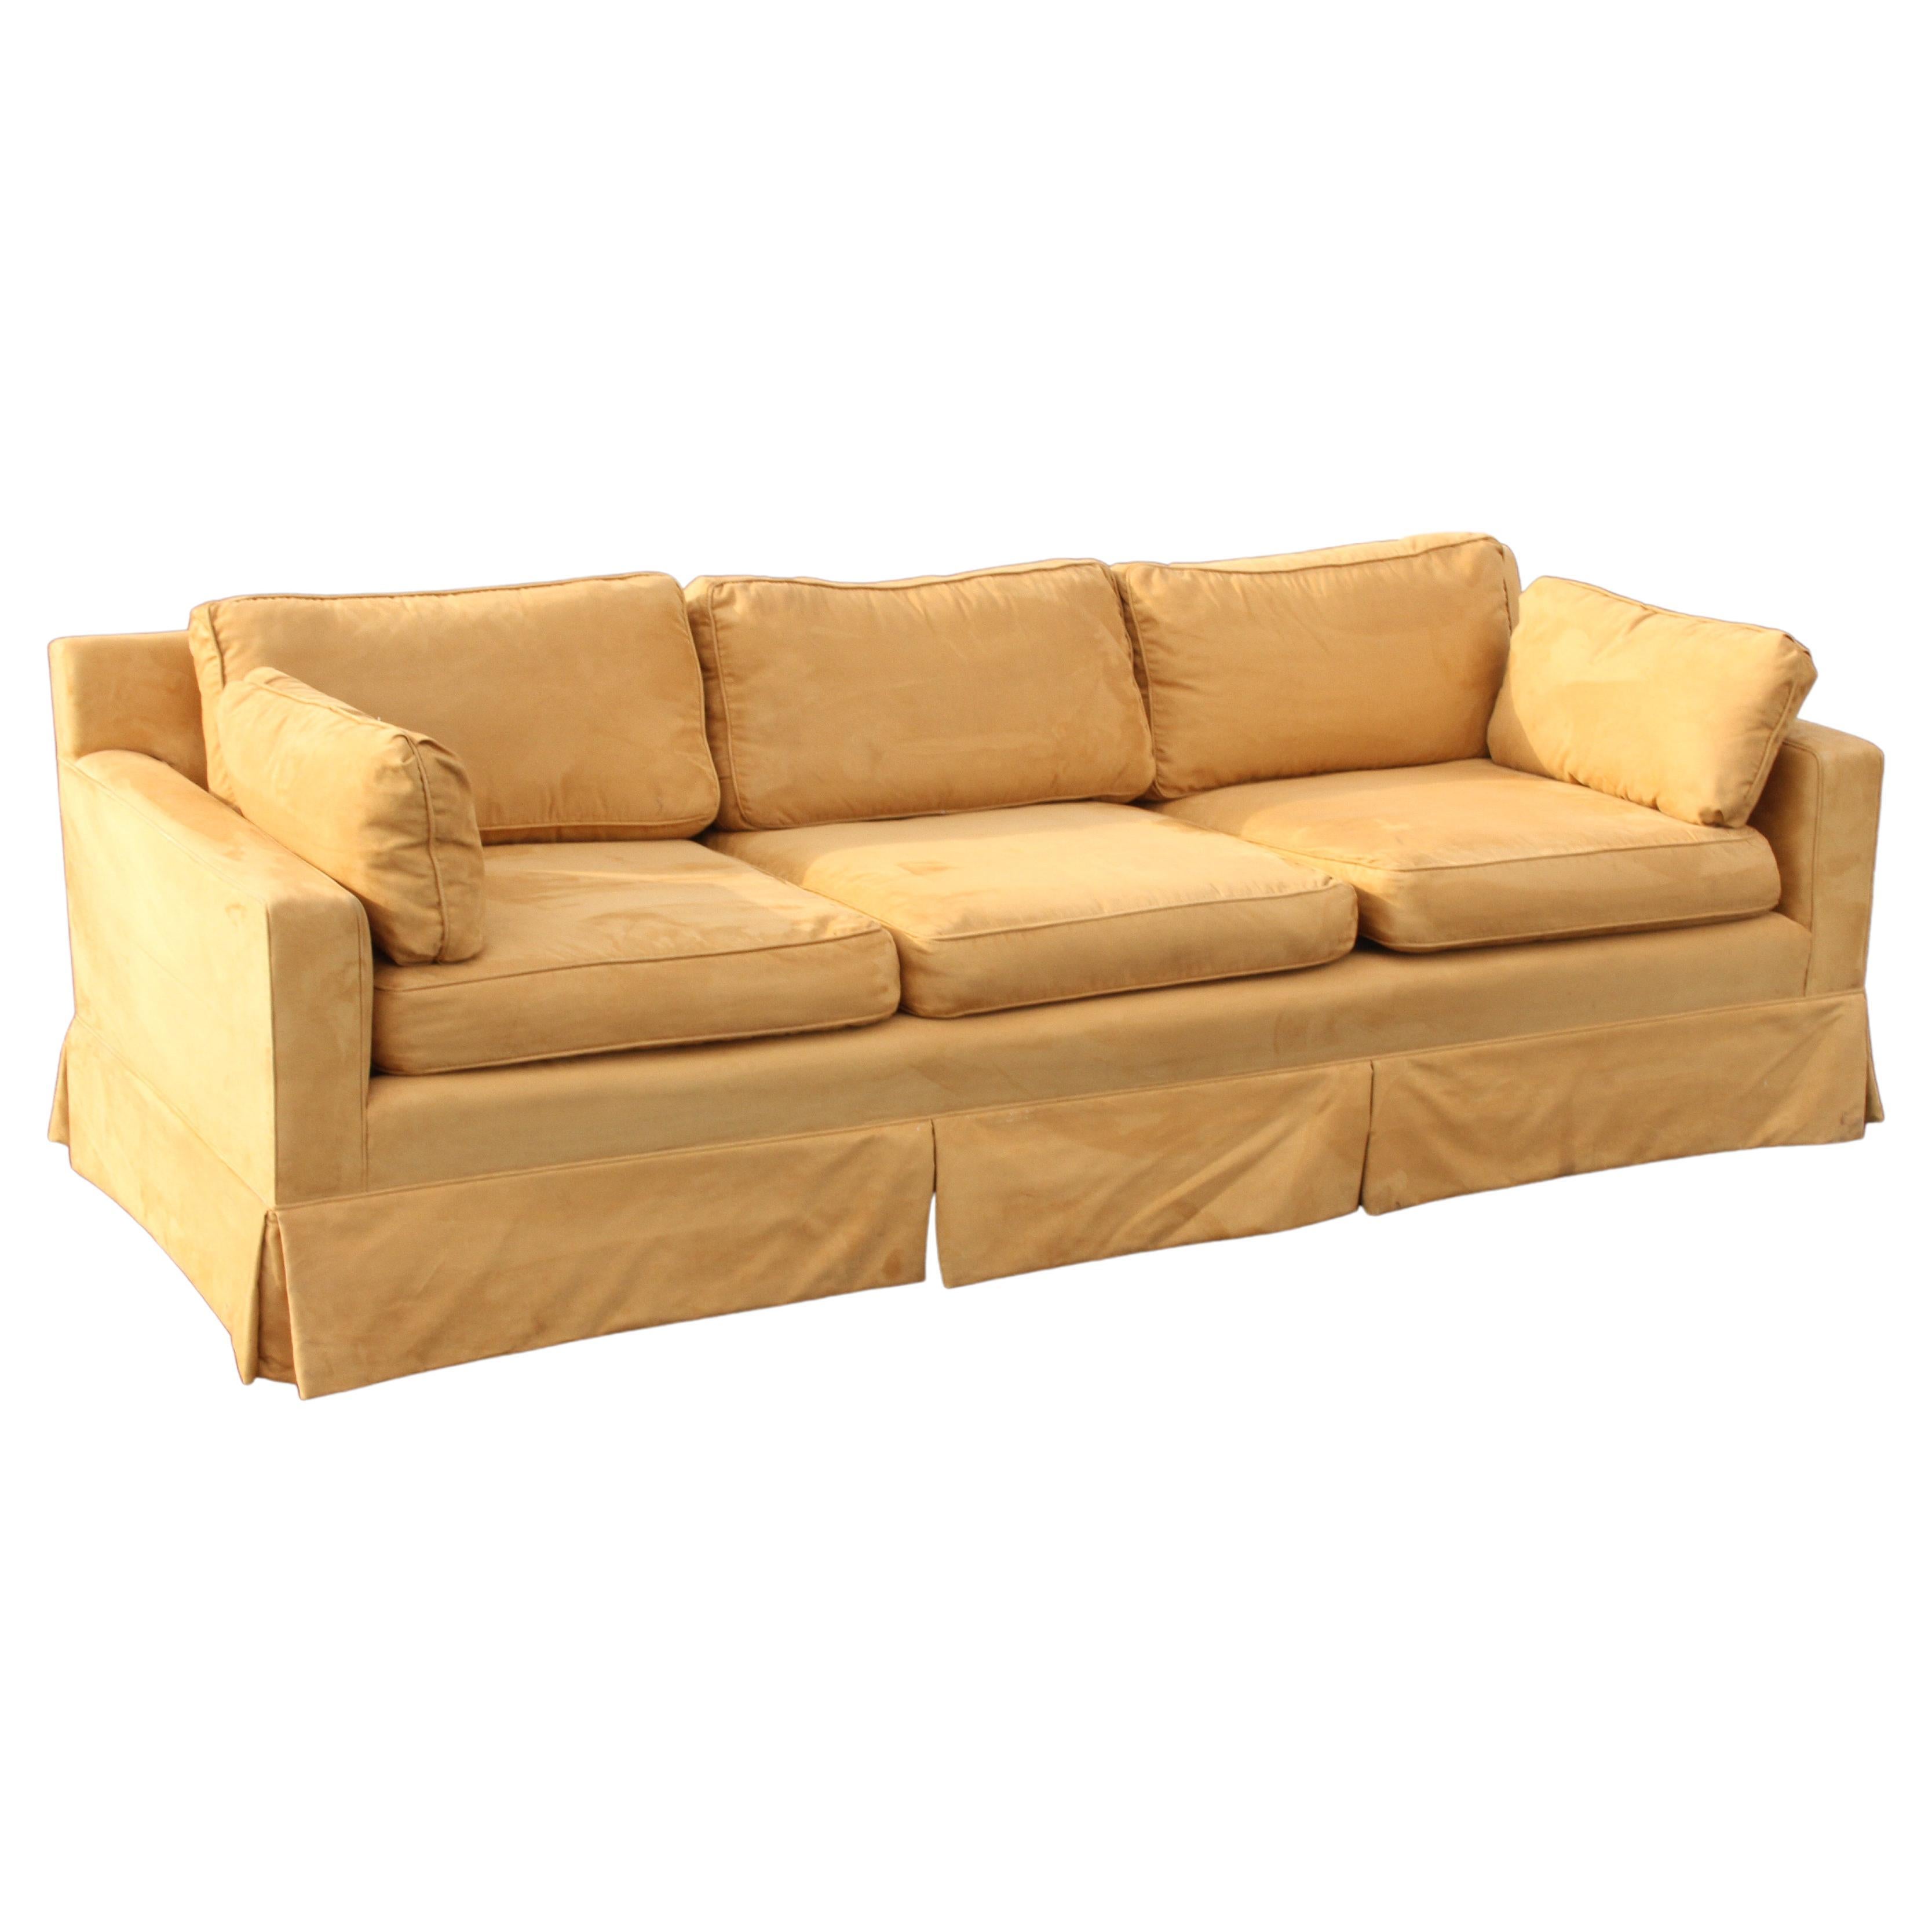 Elegant Edward Wormley for Dunbar Mid-Century Modern Sofa, Pair Available  For Sale at 1stDibs